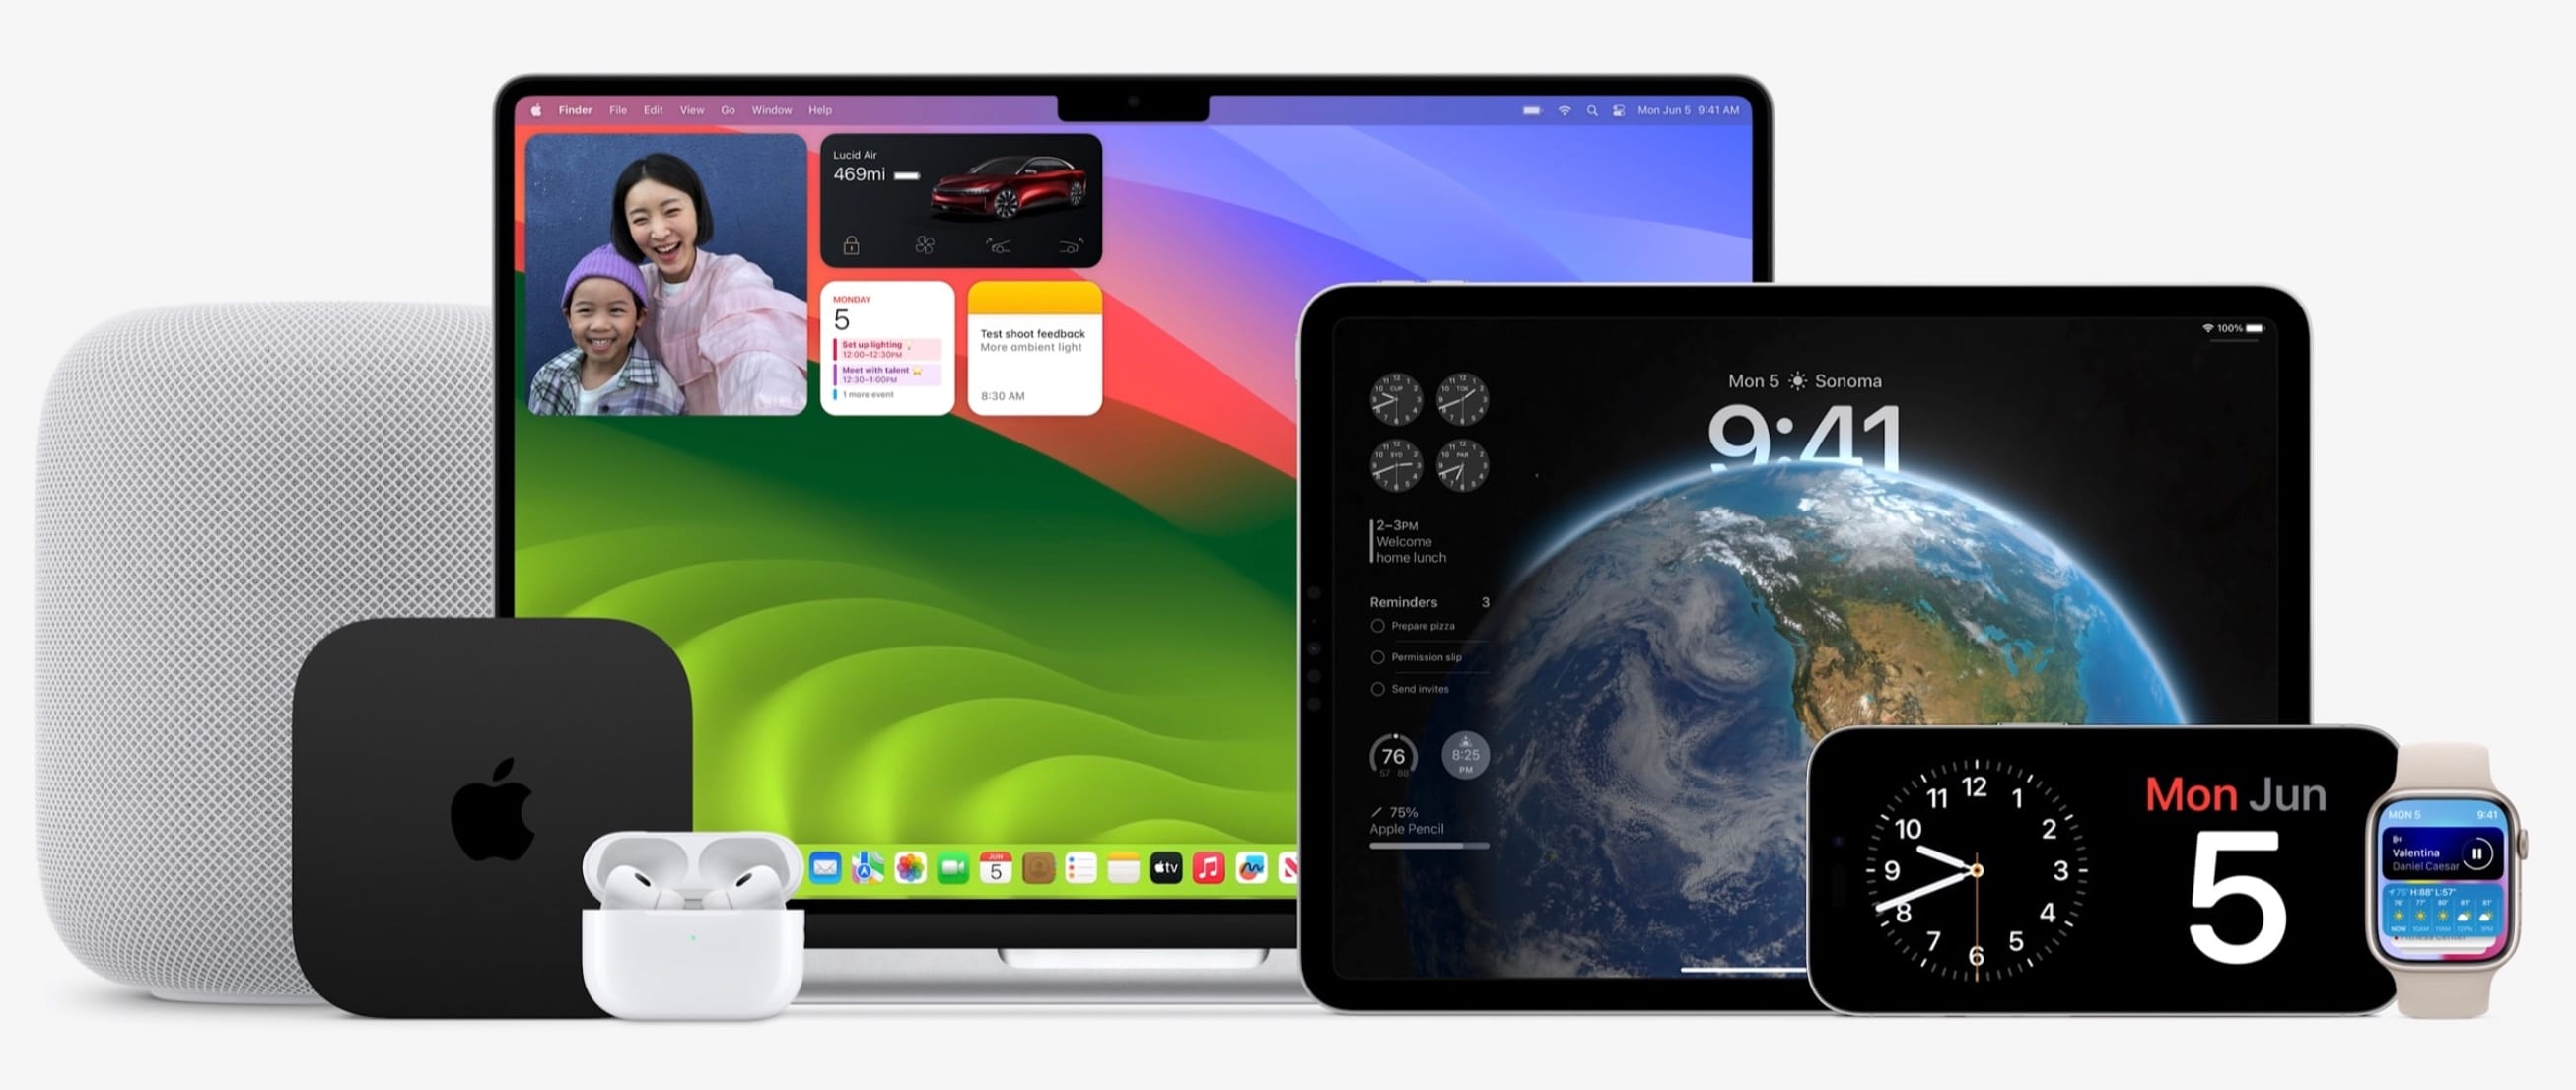 HomePod, Apple TV, AirPods Pro, MacBook Pro, iPad Pro, iPhone e Apple Watch - sistemas operacionais da Apple